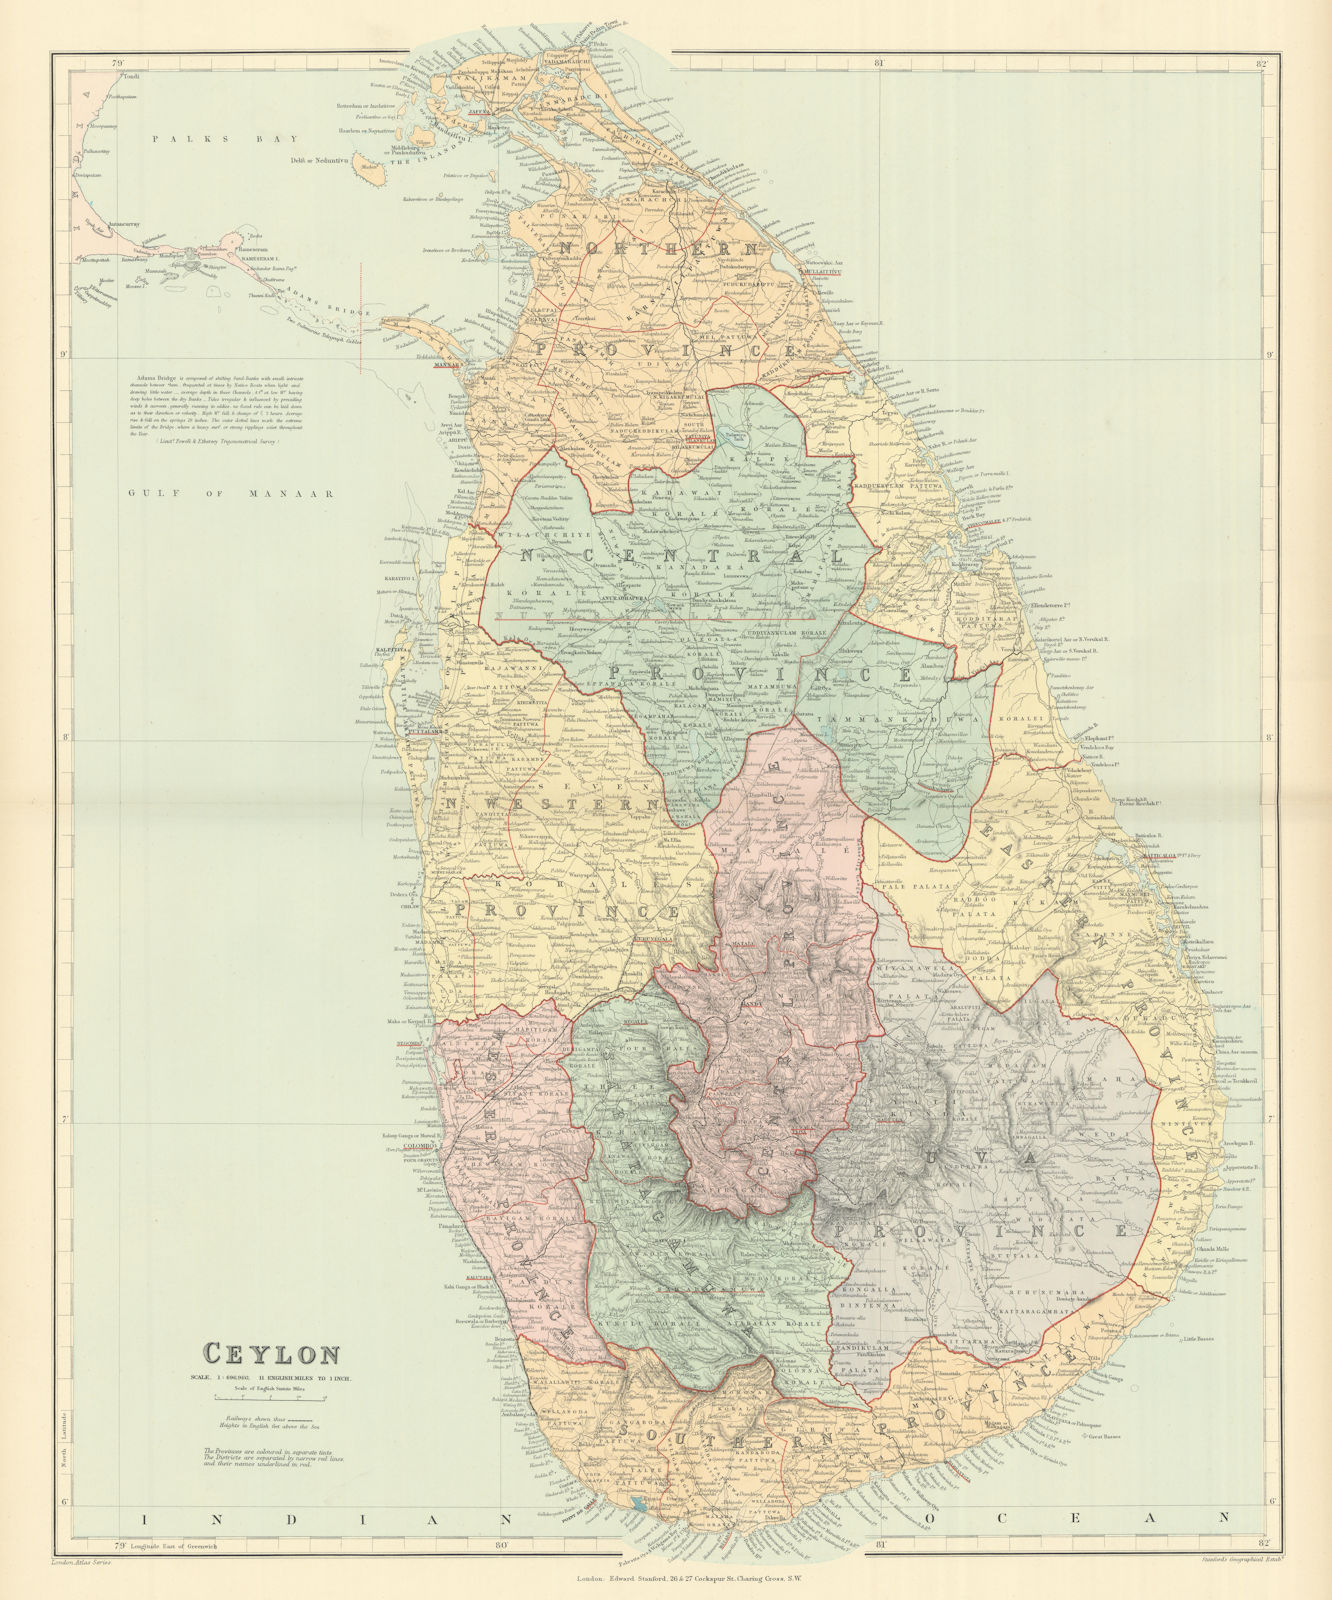 Ceylon. Sri Lanka. Provinces & railways. Large 66x53cm. STANFORD 1894 old map